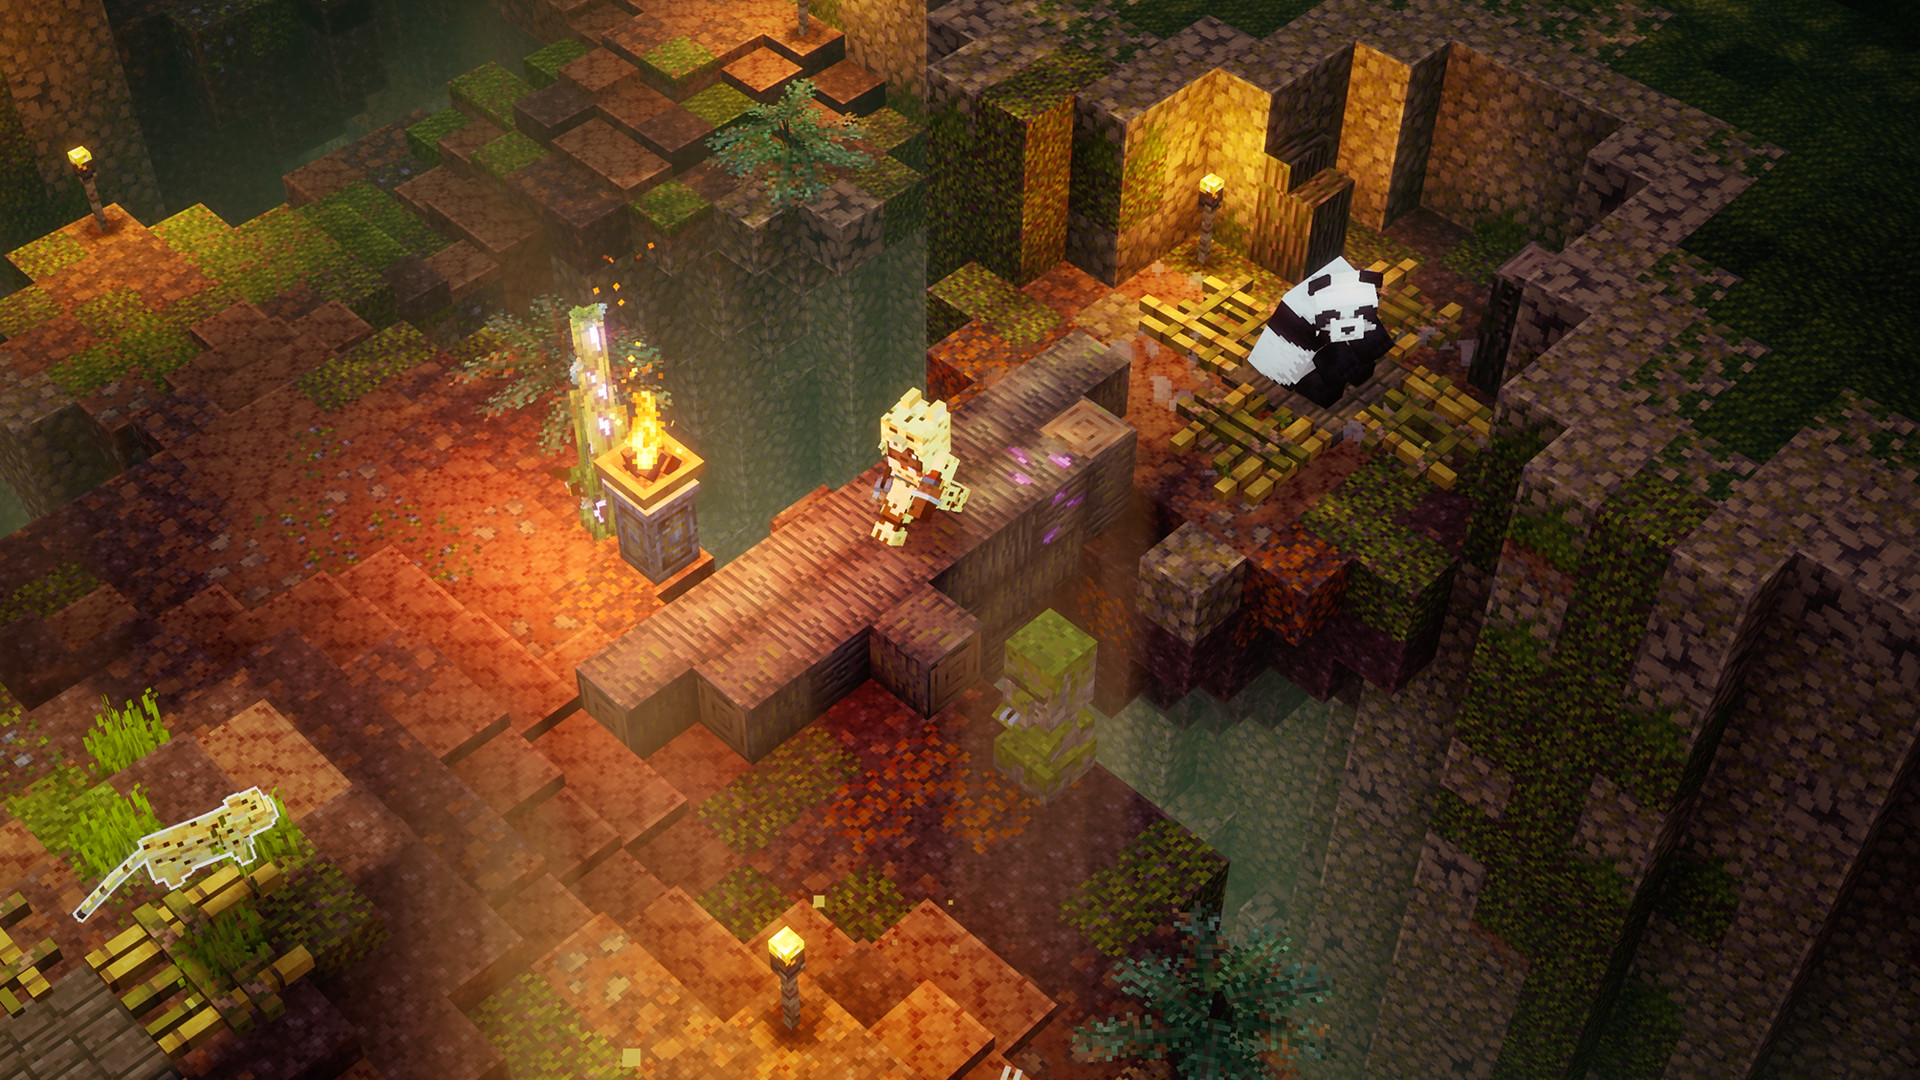 Minecraft Dungeons Jungle Awakens Wallpapers